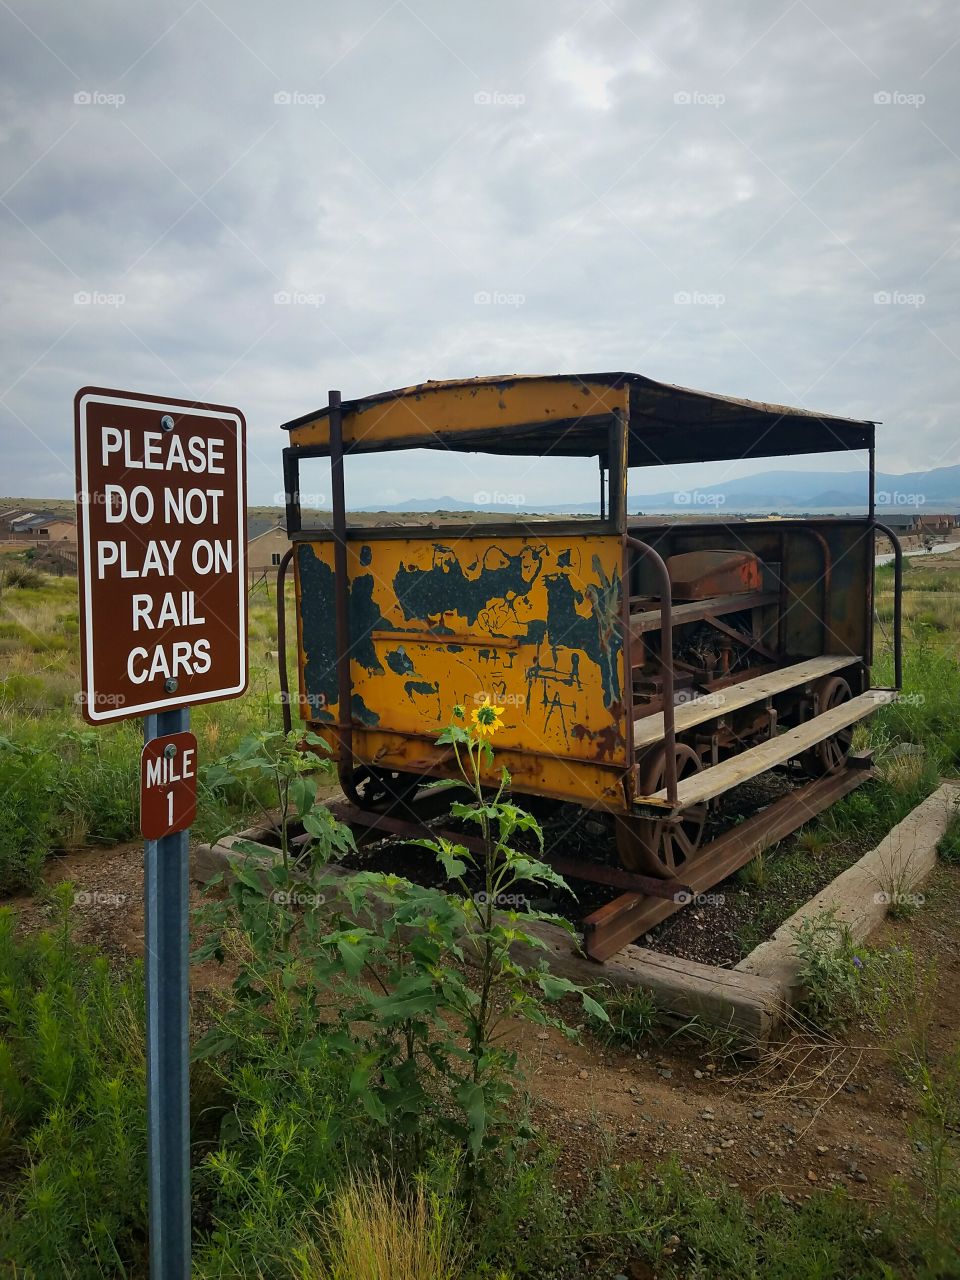 "Please do not play on rail car" sign and railcar.